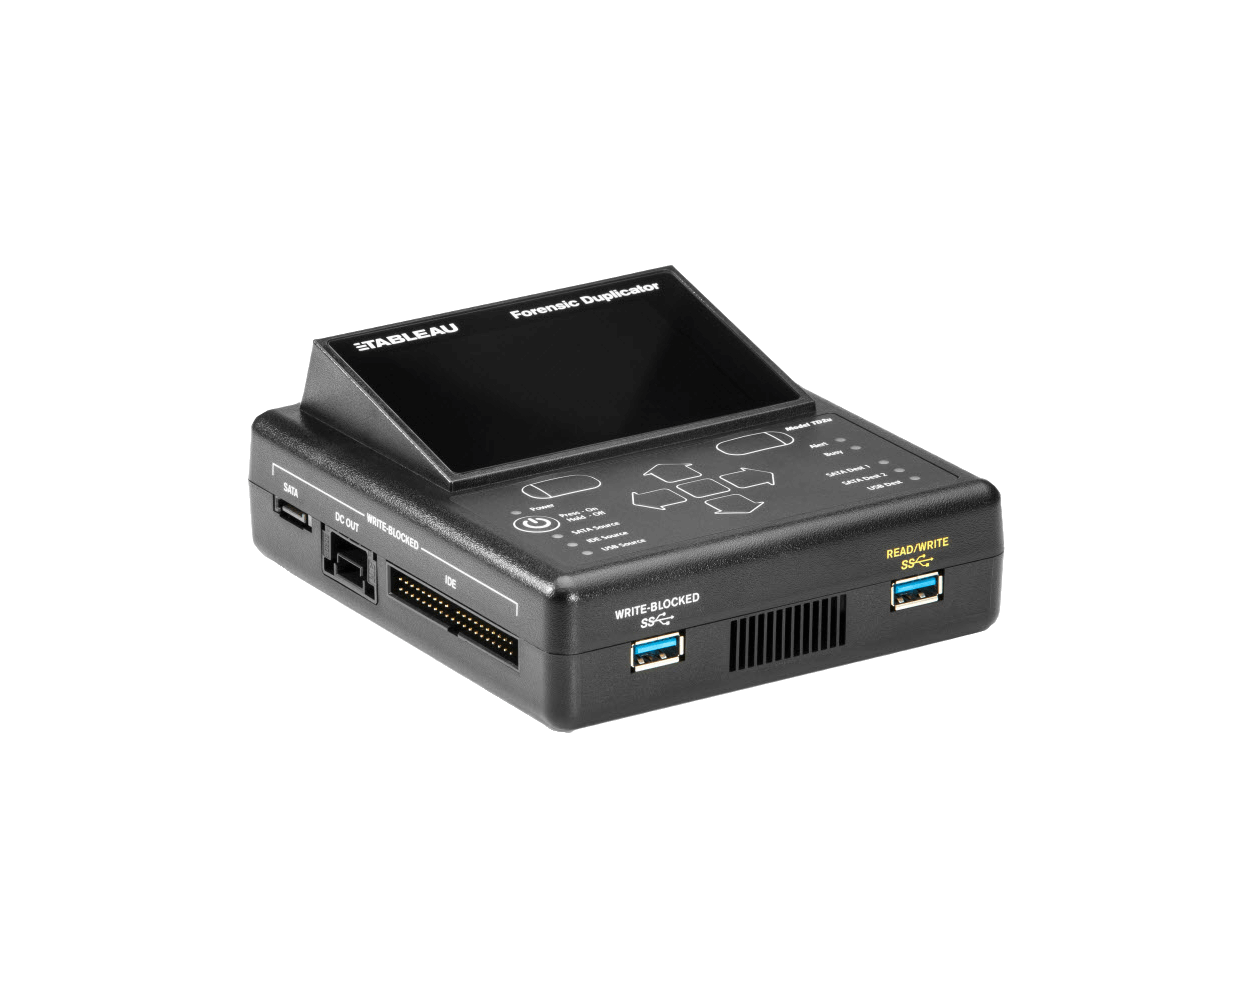 Tableau TD2u Forensic Duplicator TD3-3 mSATA/m.2 SSD Adapter Bundle with SiForce Rugged Case 